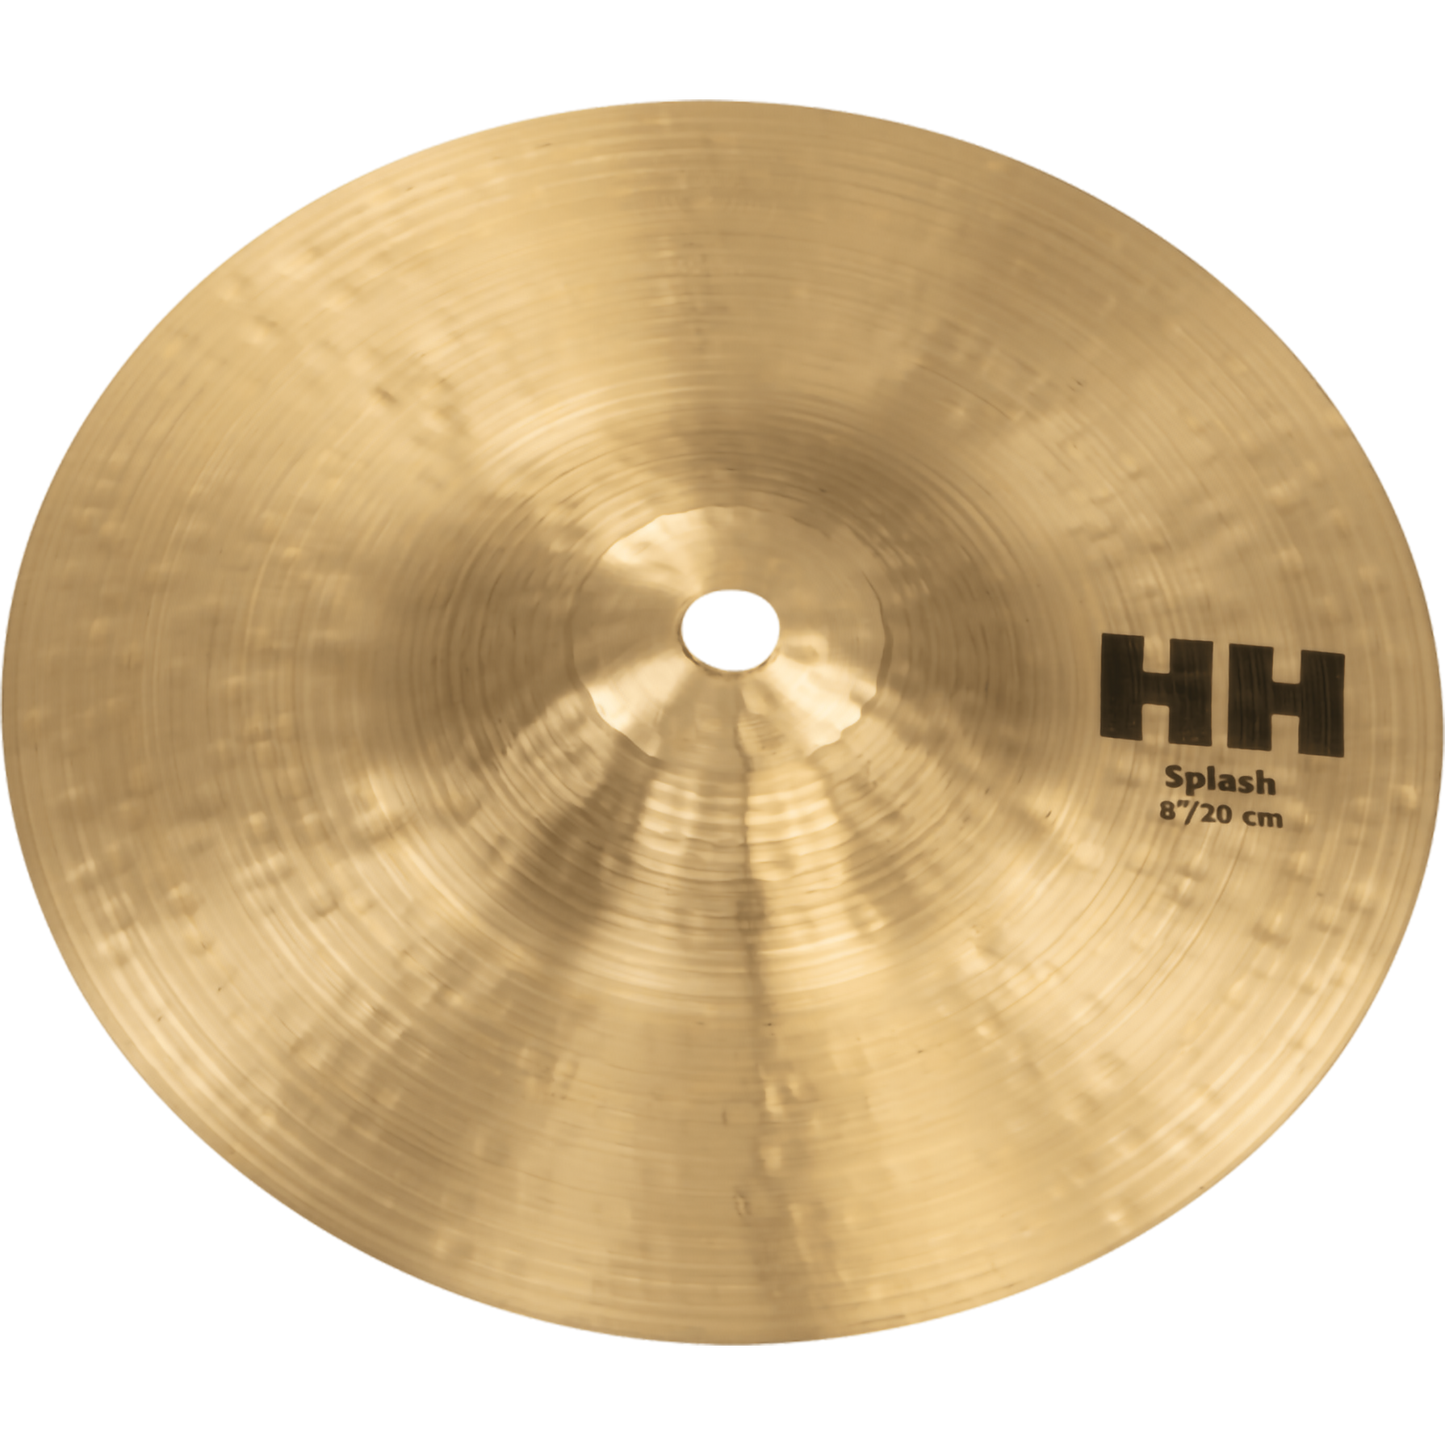 Sabian 8” HH Splash Cymbal